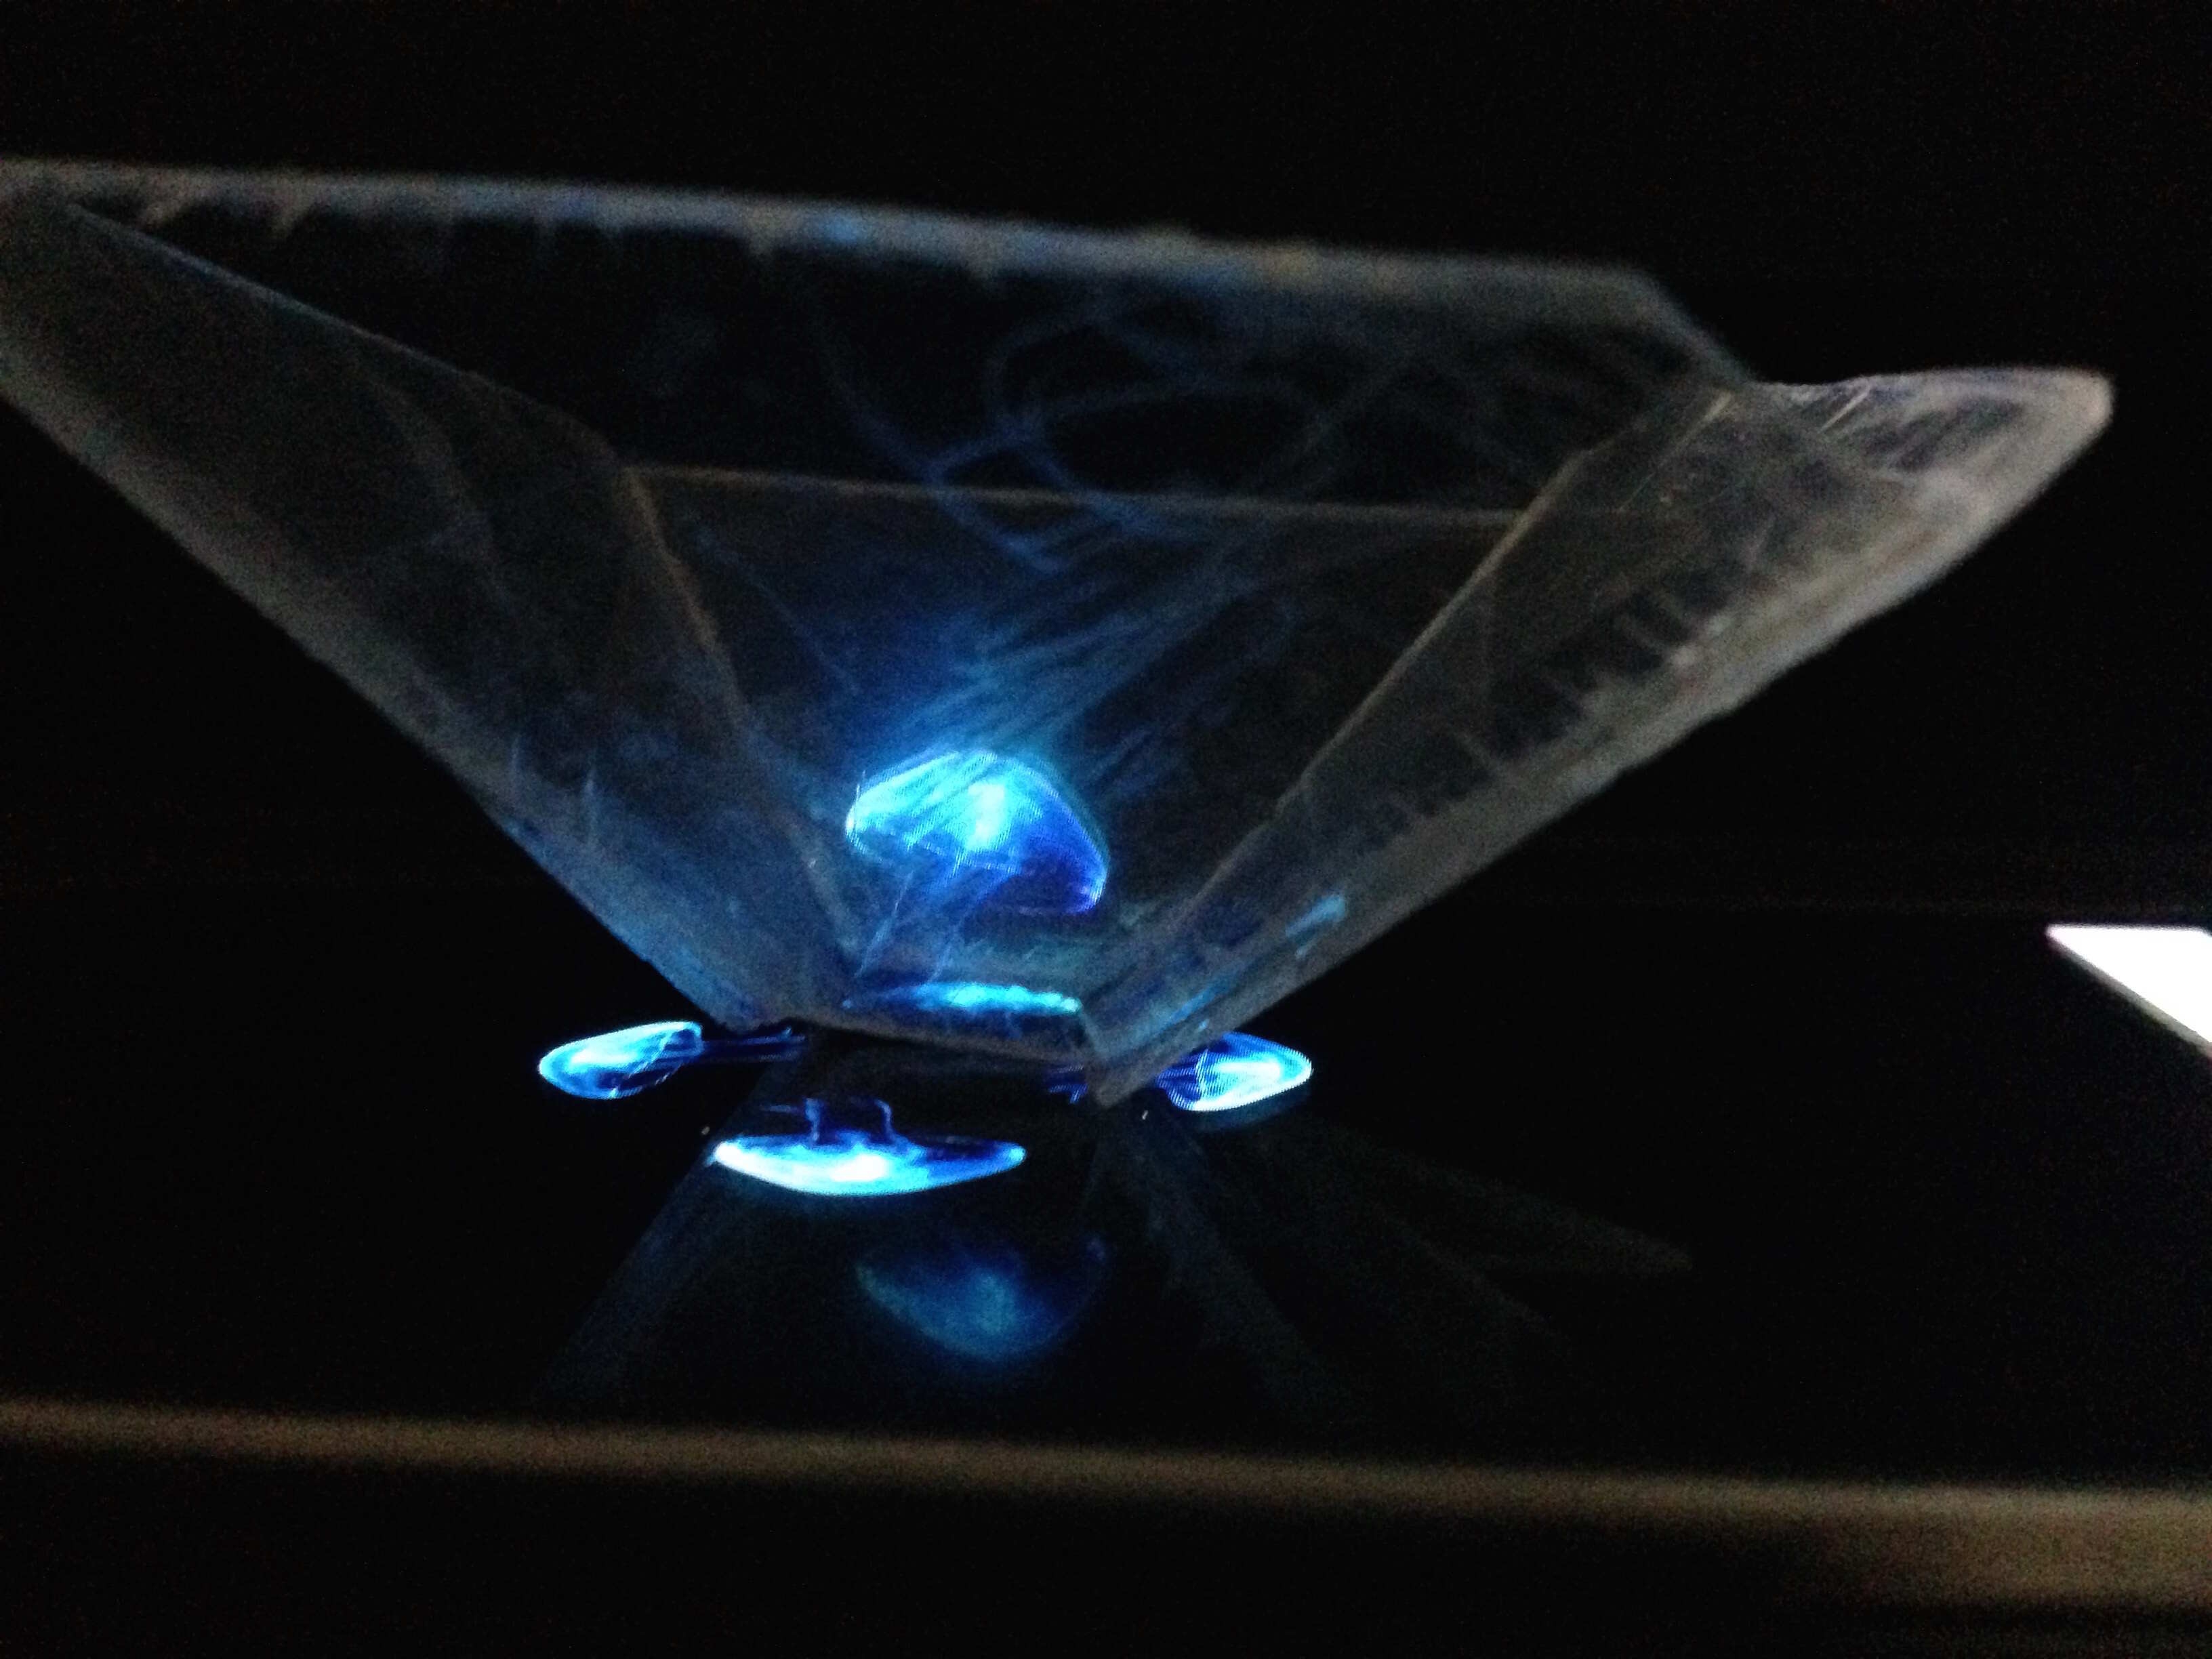 How To Make Diy Hologram For Smartphone